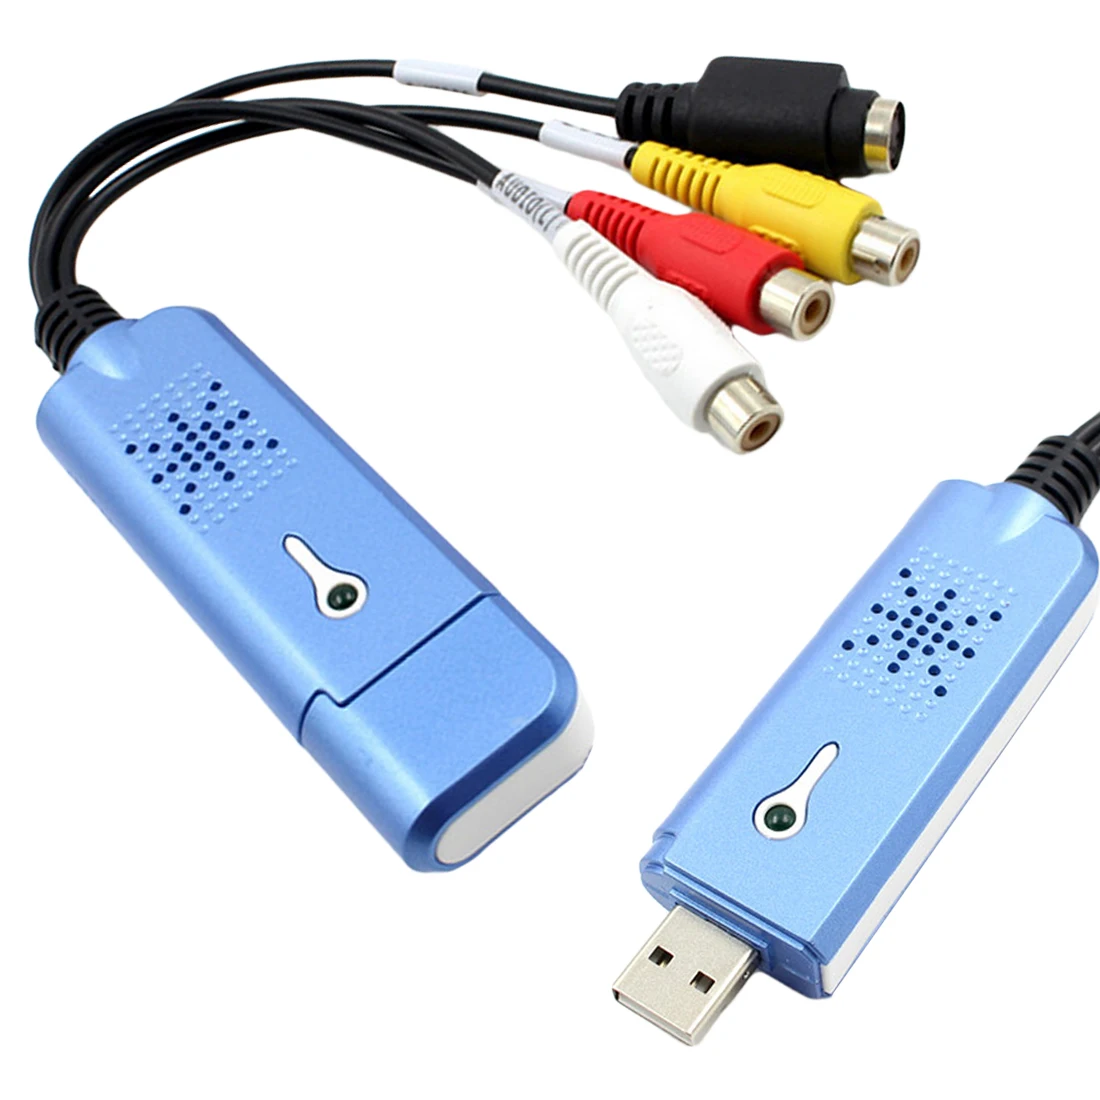 Etmakit USB 2.0 Audio Video Grabber Adapter Video Capture Card Converter TV Tuner for Computer Win XP 7 8 10 NTSC PAL